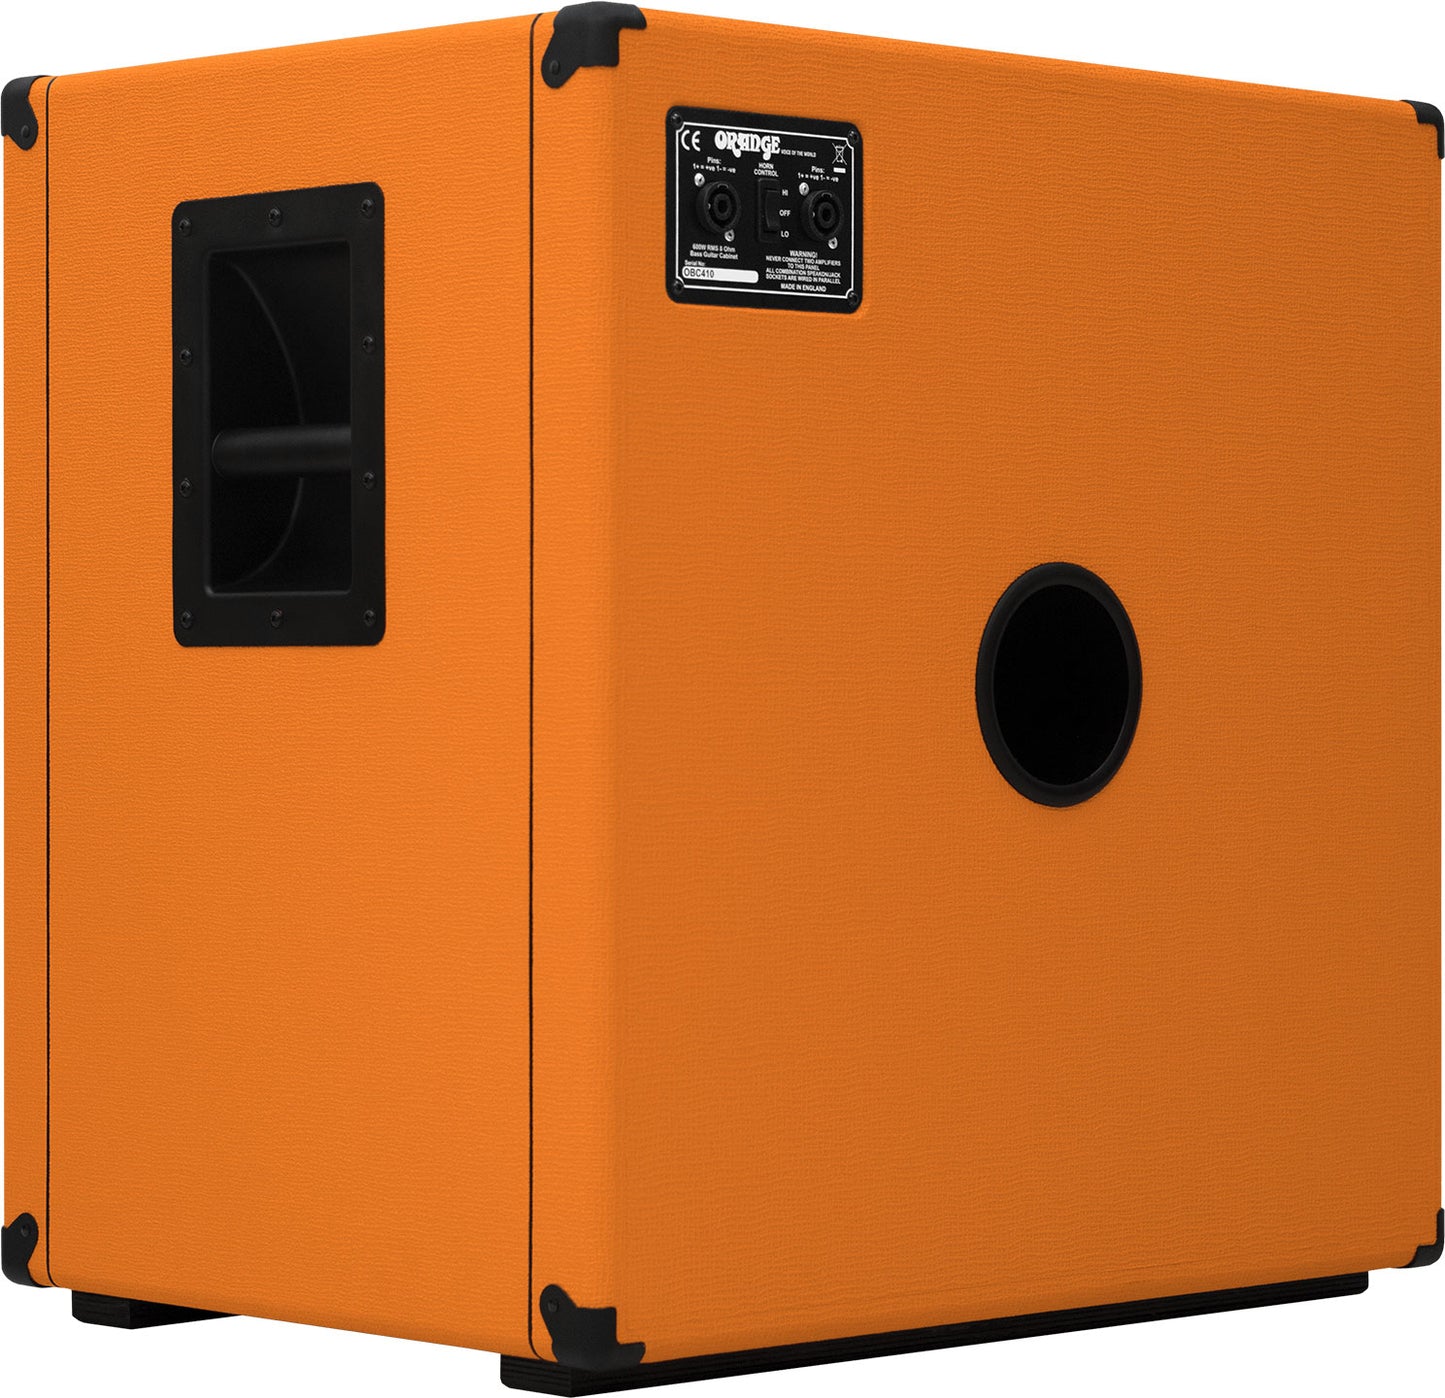 Orange OBC410 4X10 Bass Cabinet